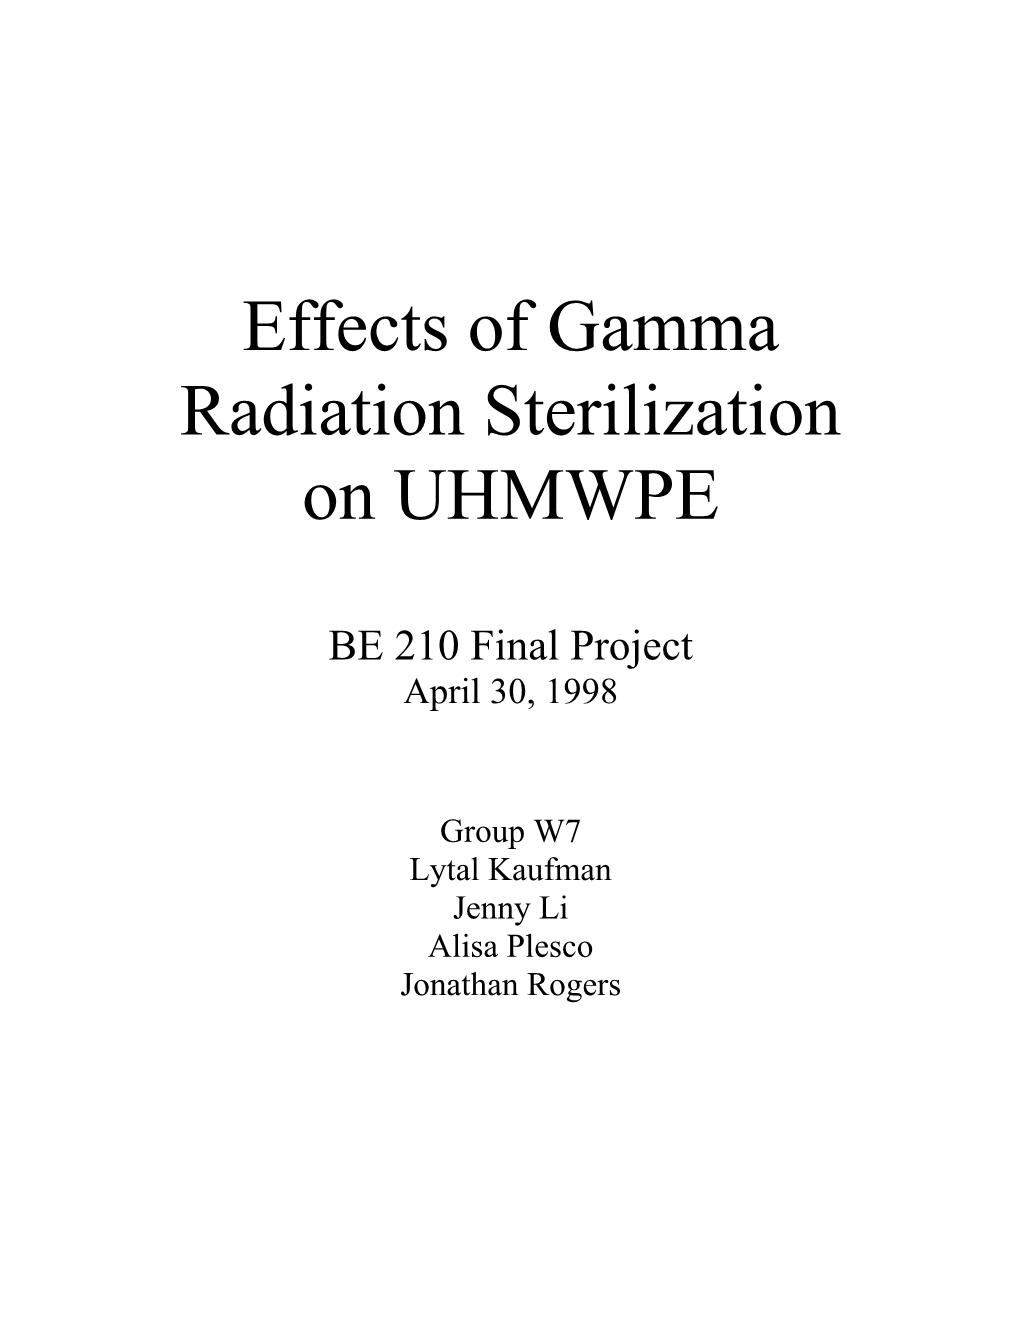 Effects of Gamma Radiation Sterilization on UHMWPE